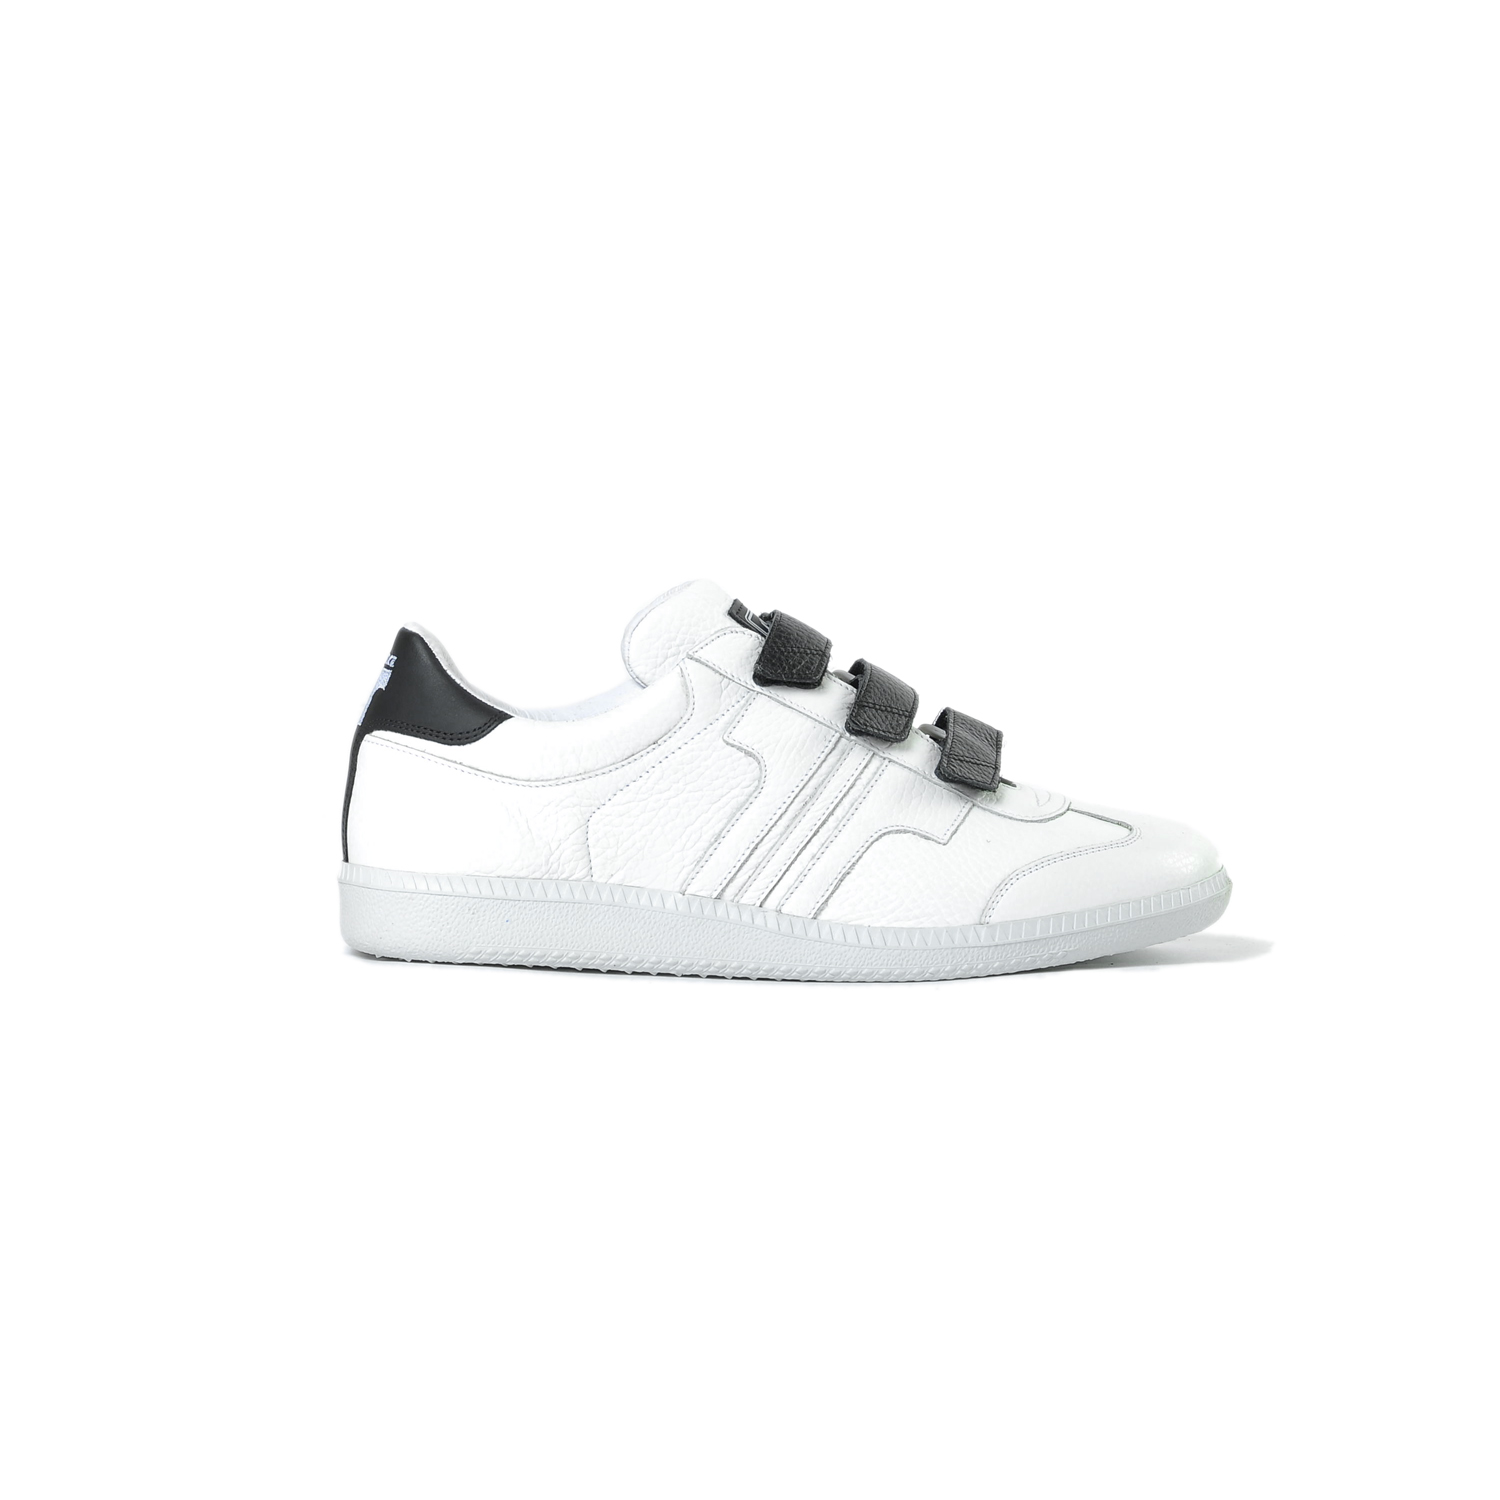 Tisza shoes - Compakt delux - White-black